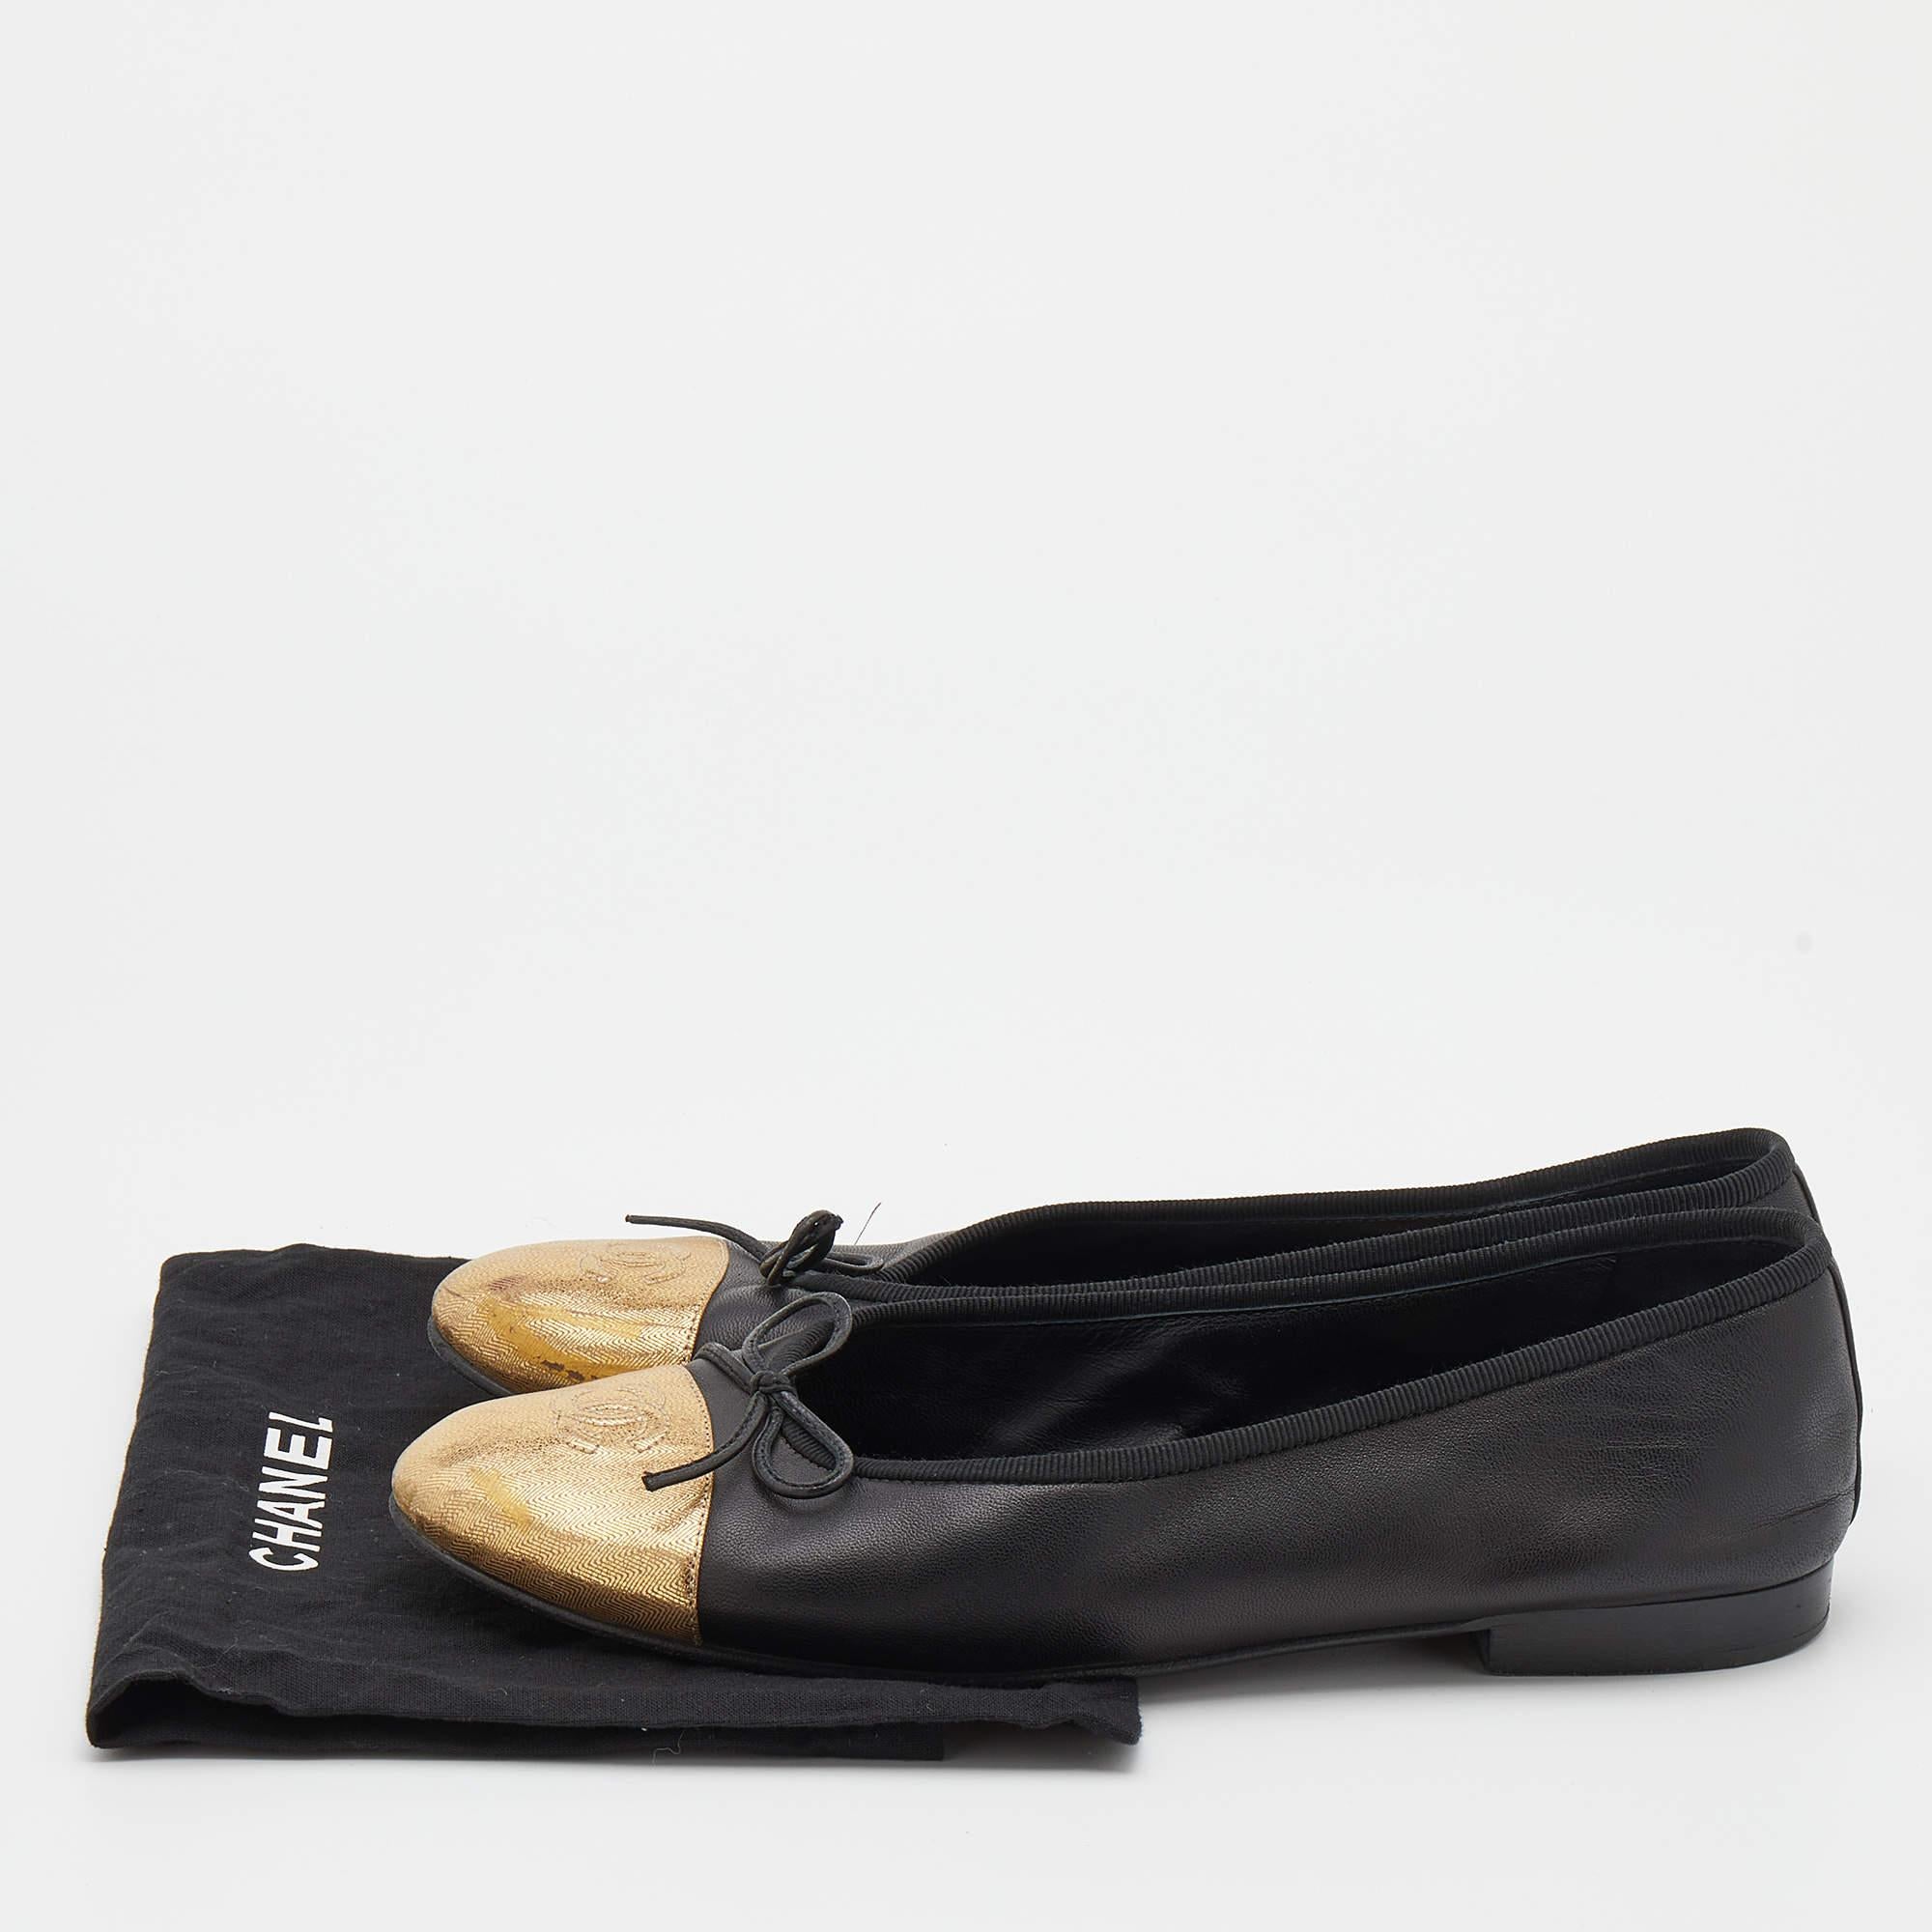 Chanel Black/Gold Leather CC Cap Toe Bow Ballet Flats Size 38.5 2